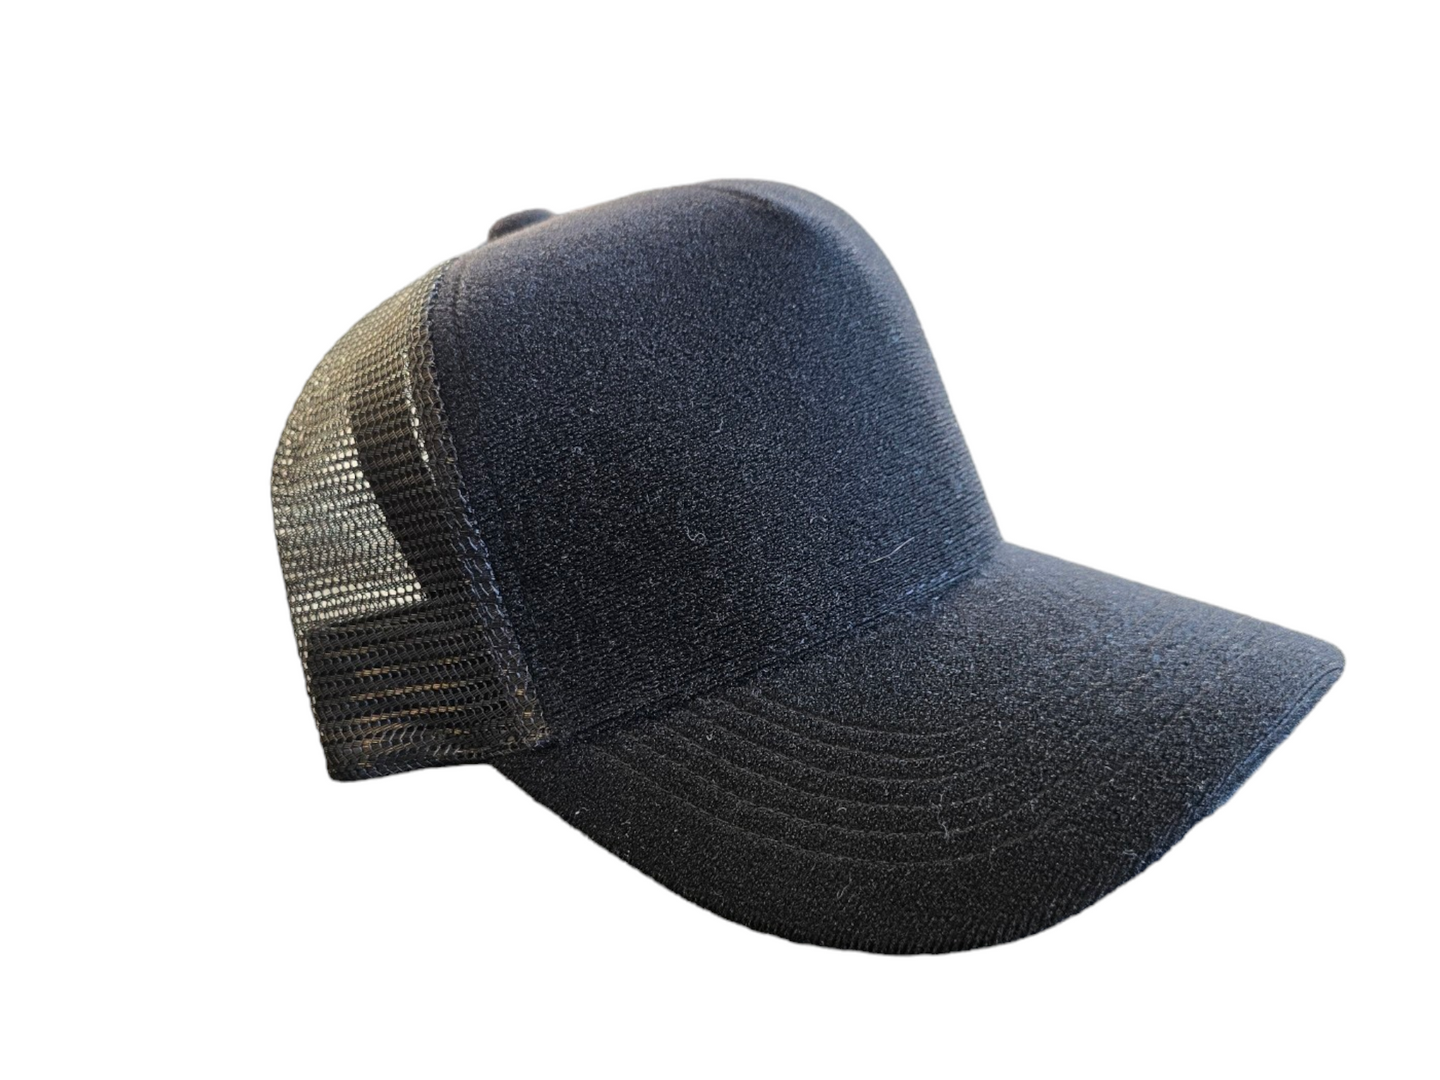 "Blank Canvas" Stiky Trucker Hat - Black